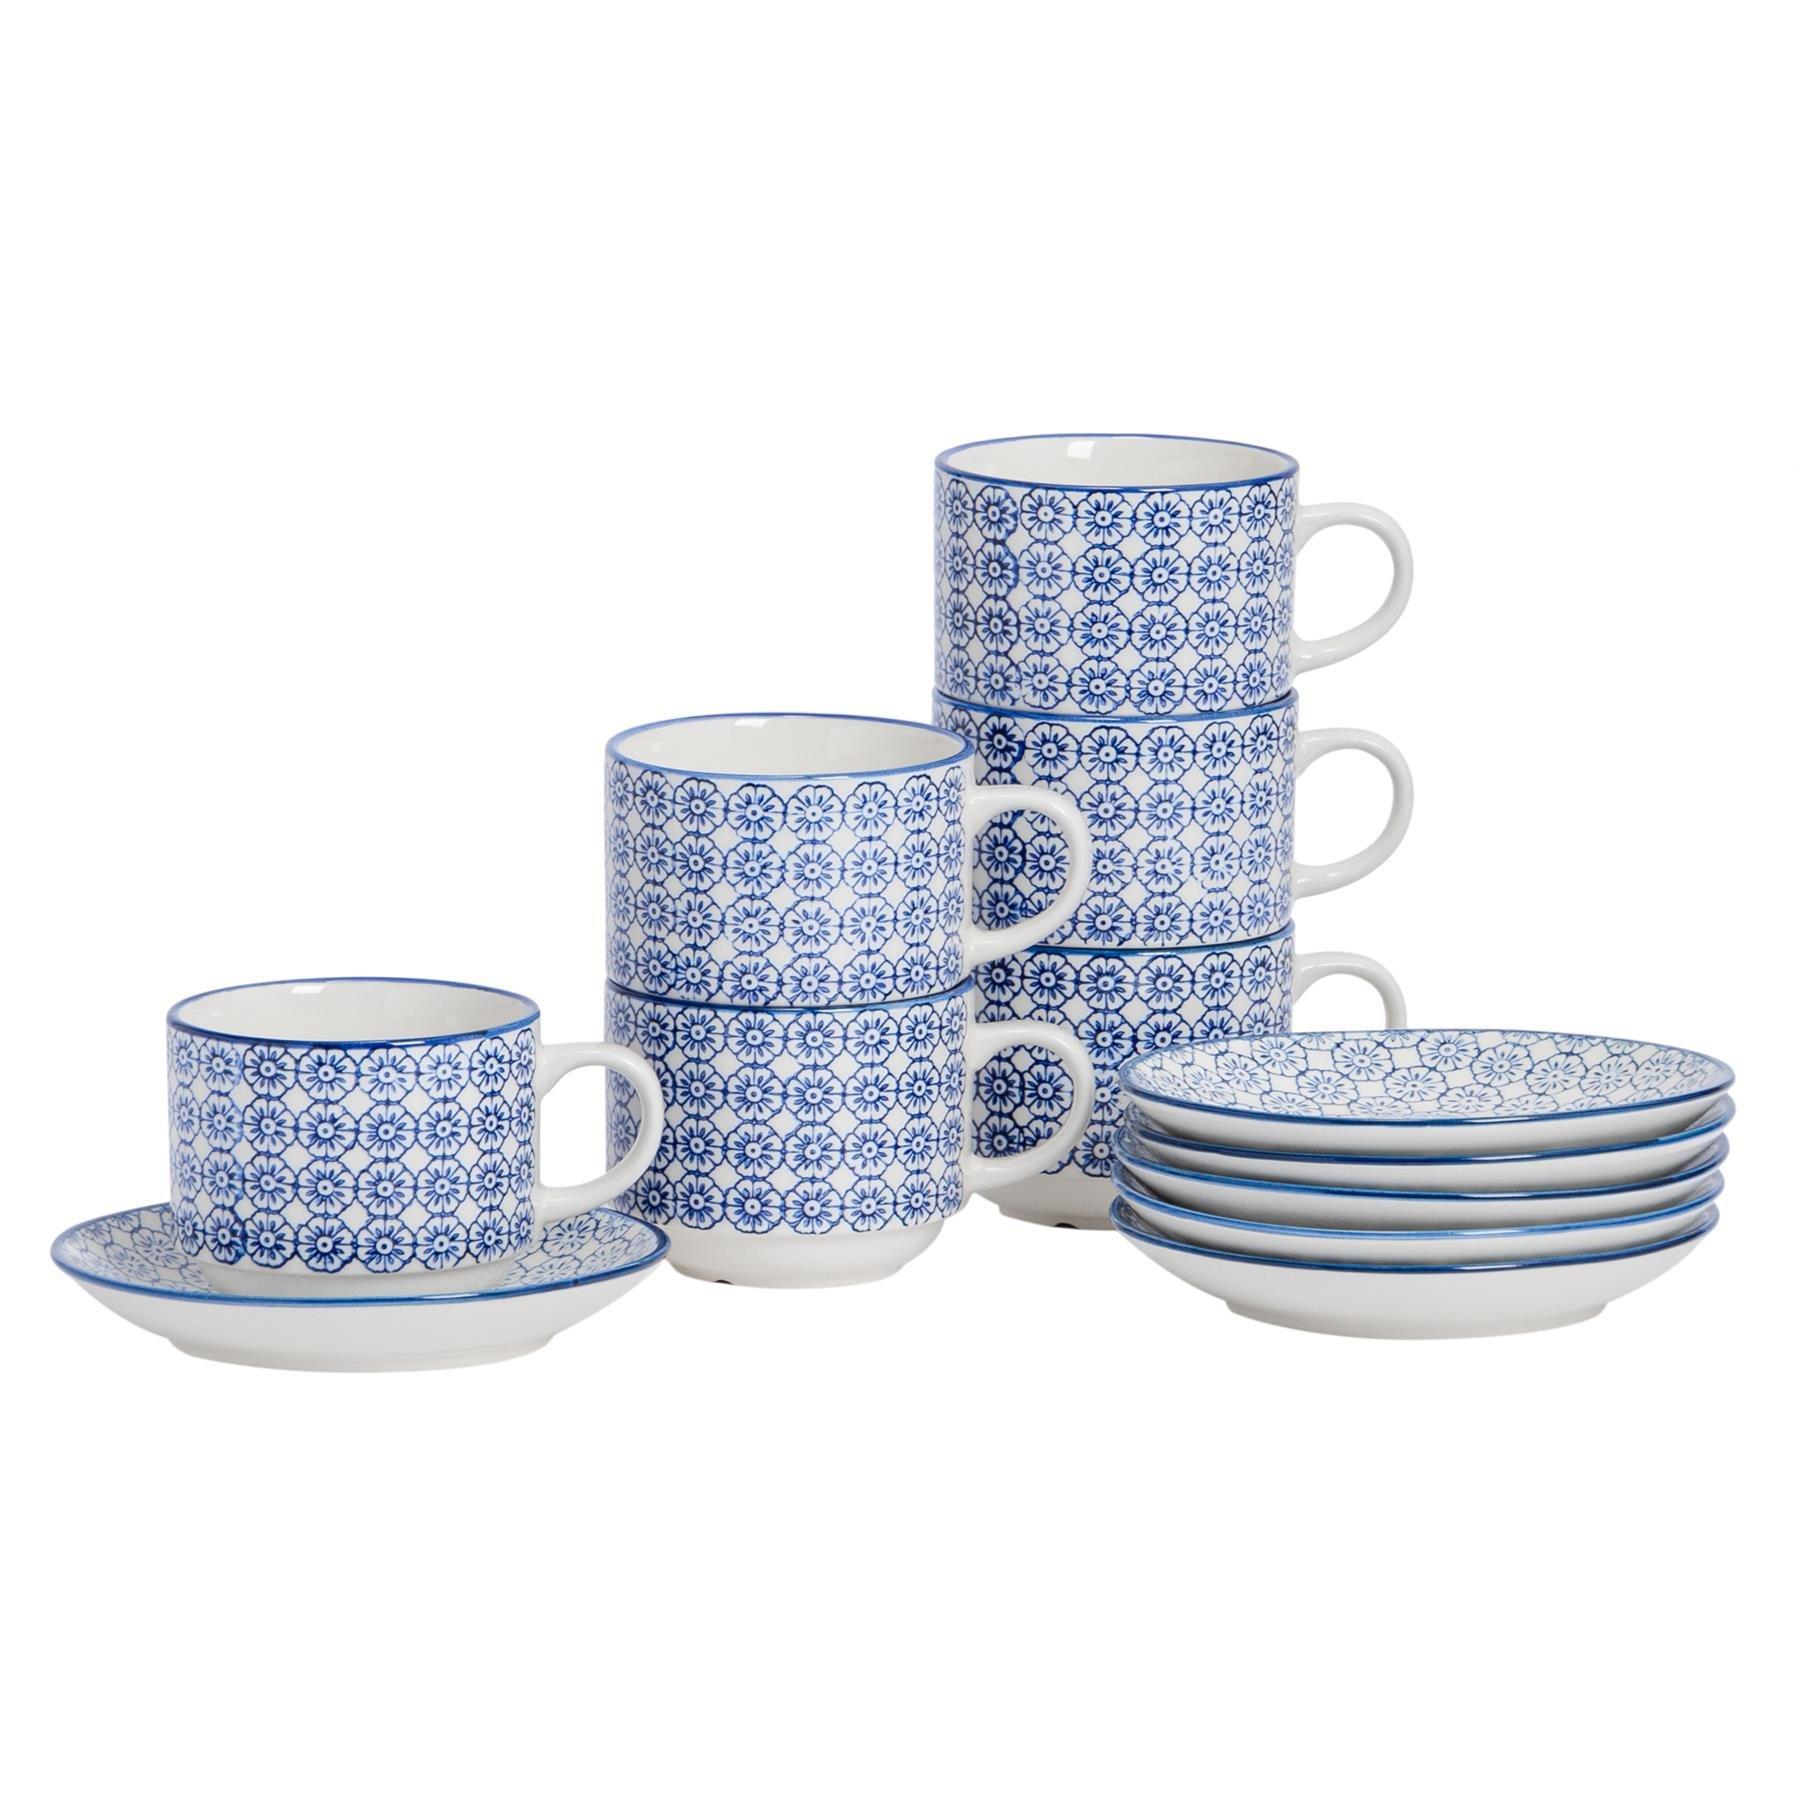 48 Piece Hand-Printed Stacking Teacups & Saucers Set - 260ml